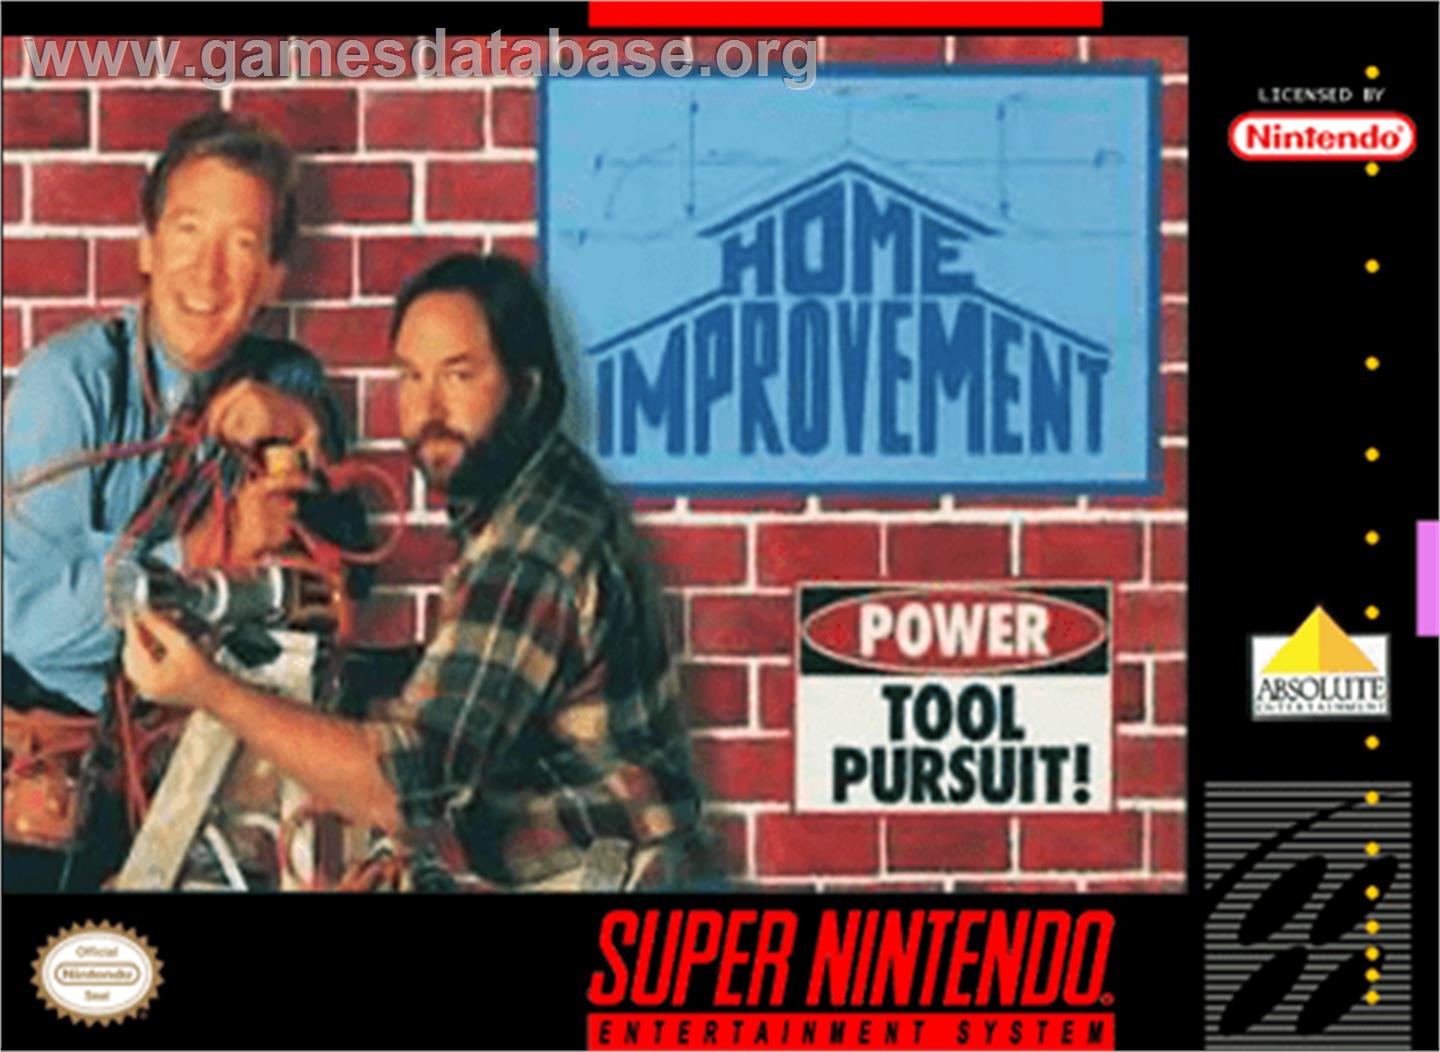 Home Improvement: Power Tool Pursuit - Nintendo SNES - Artwork - Box